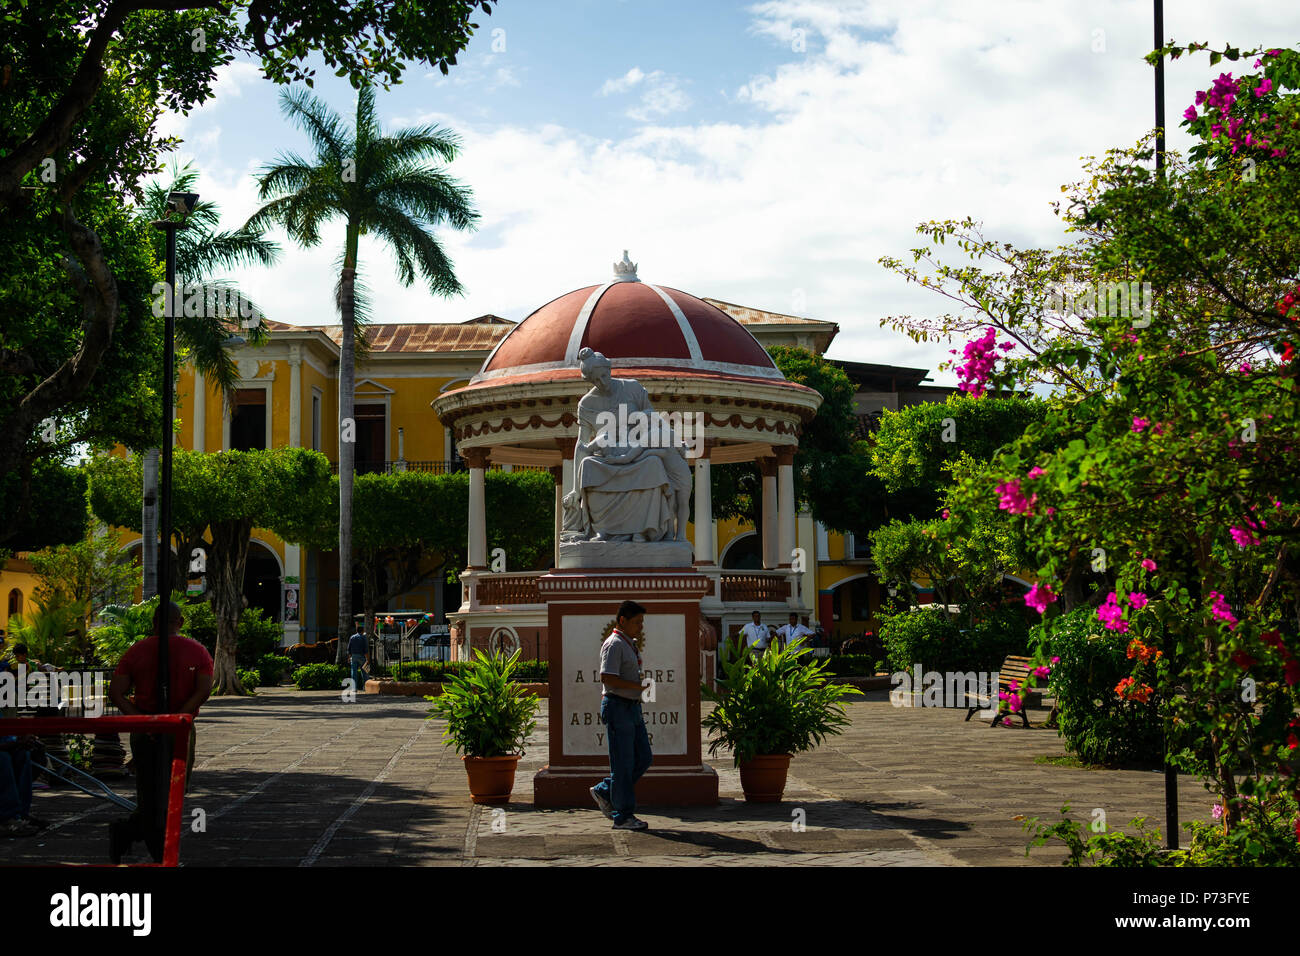 Granada, Nicaragua. Februar 7, 2018. Ein Blick auf die Statue im Central Park von Granada, Nicaragua Stockfoto